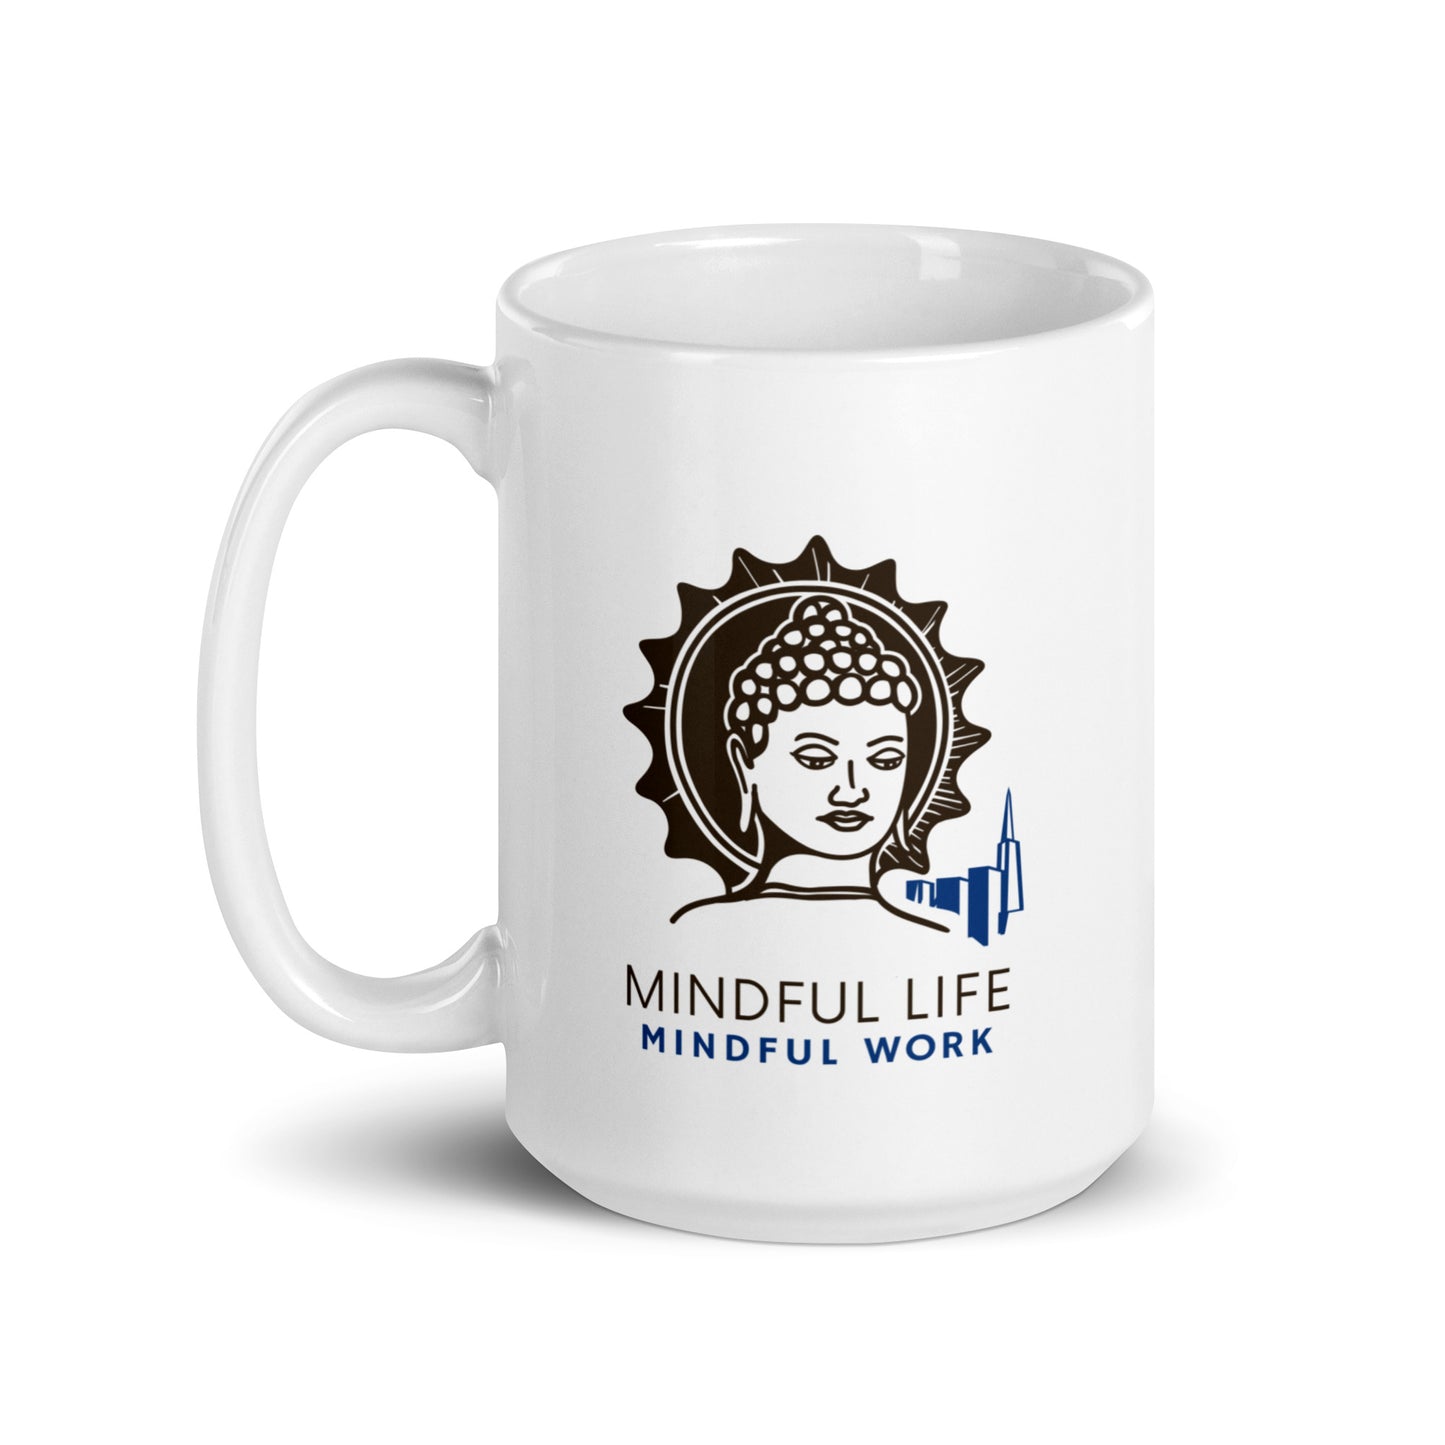 Mindful Life, Mindful Work - White Glossy Mug